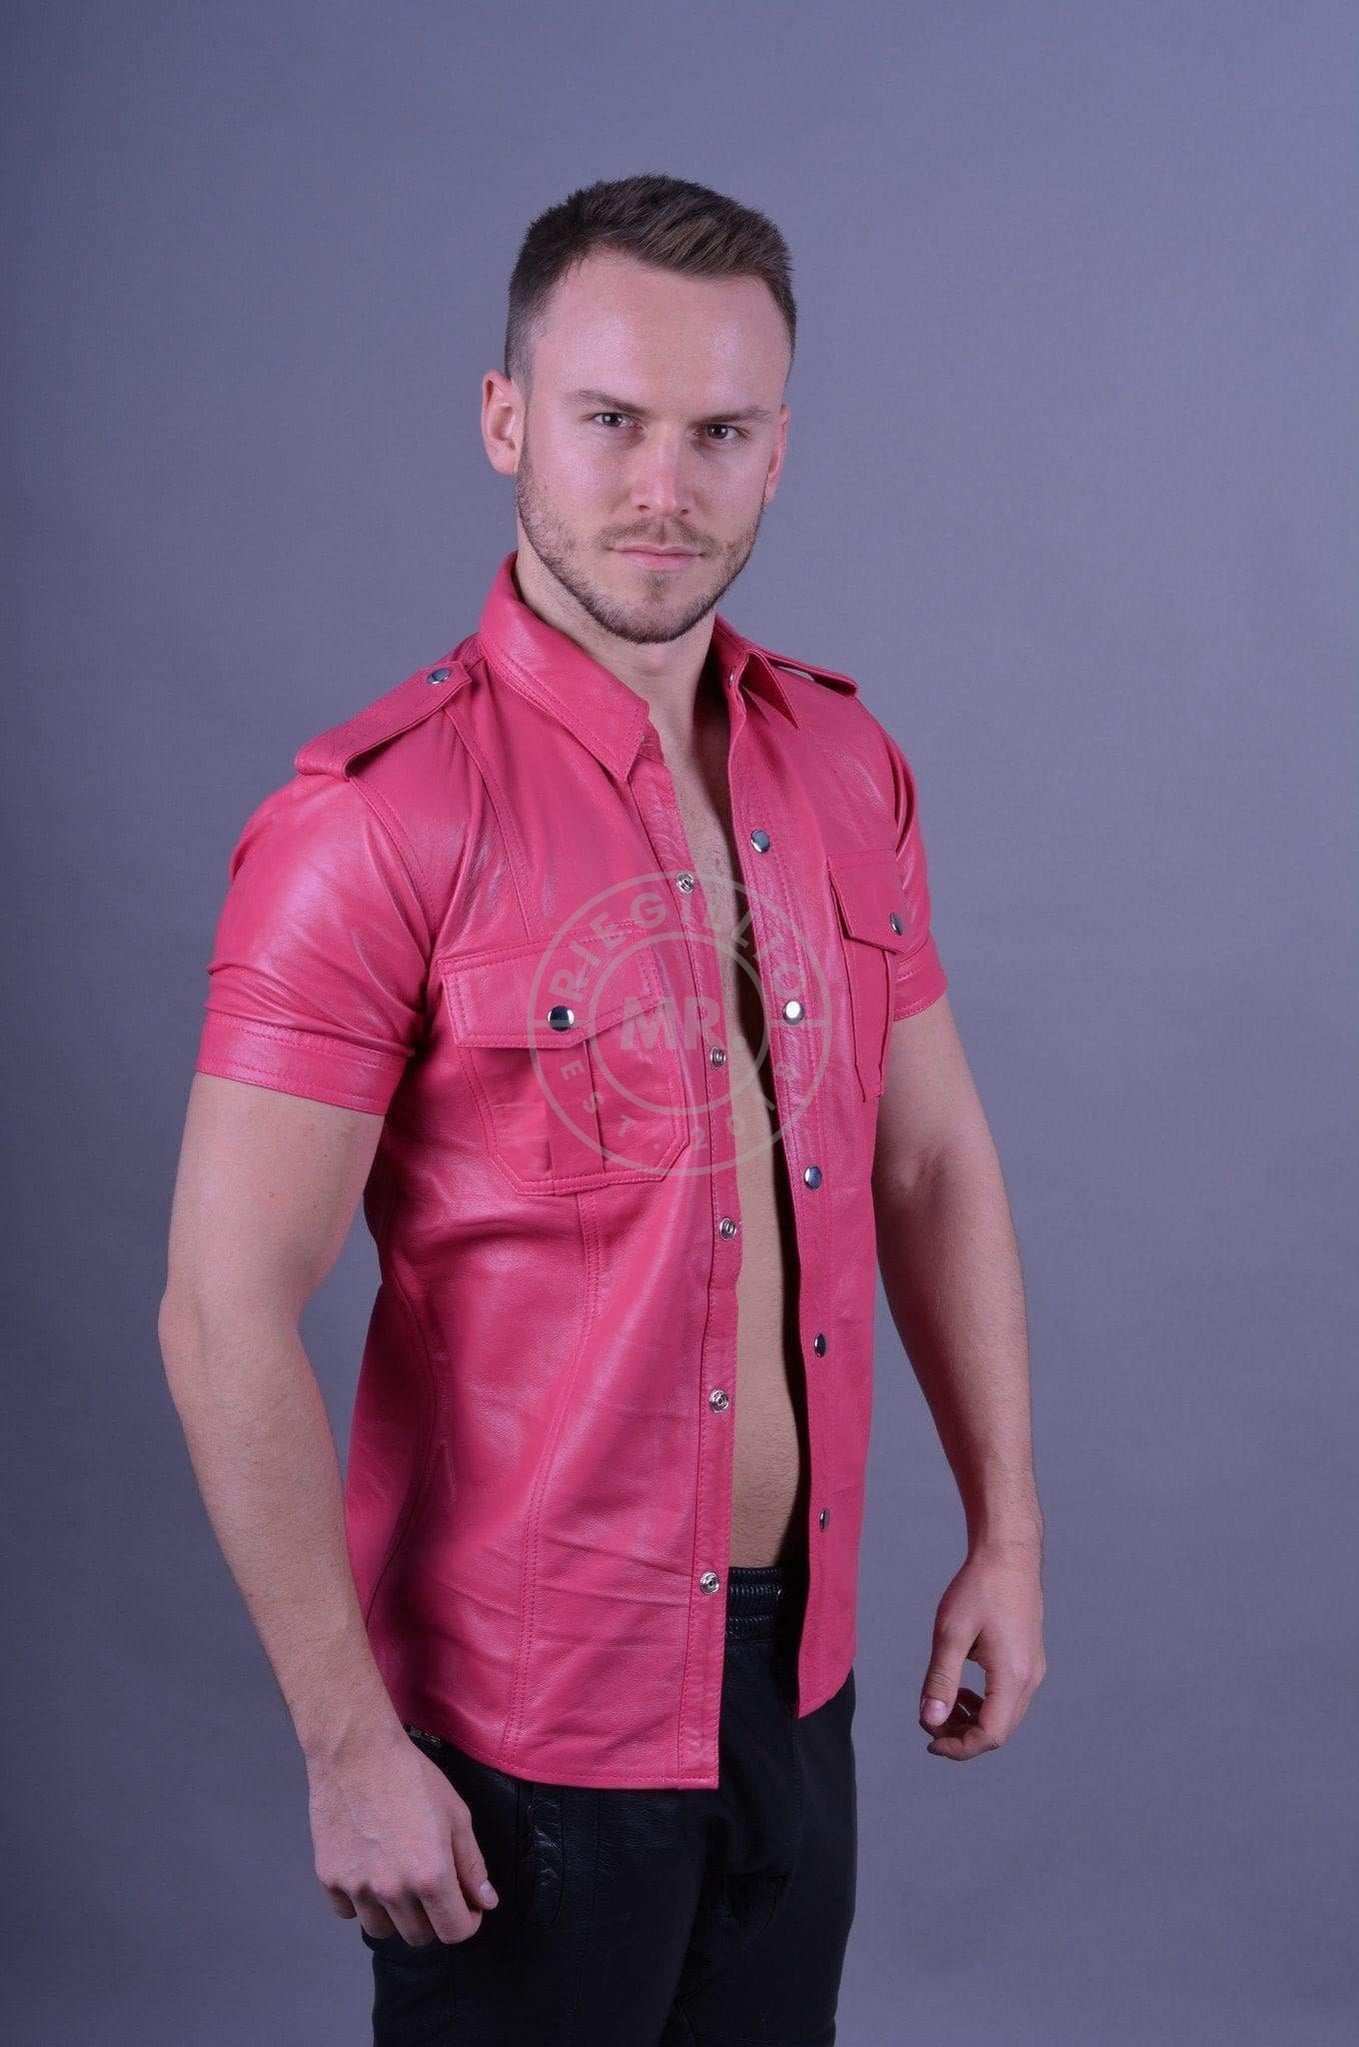 Pink Leather Shirt at MR. Riegillio